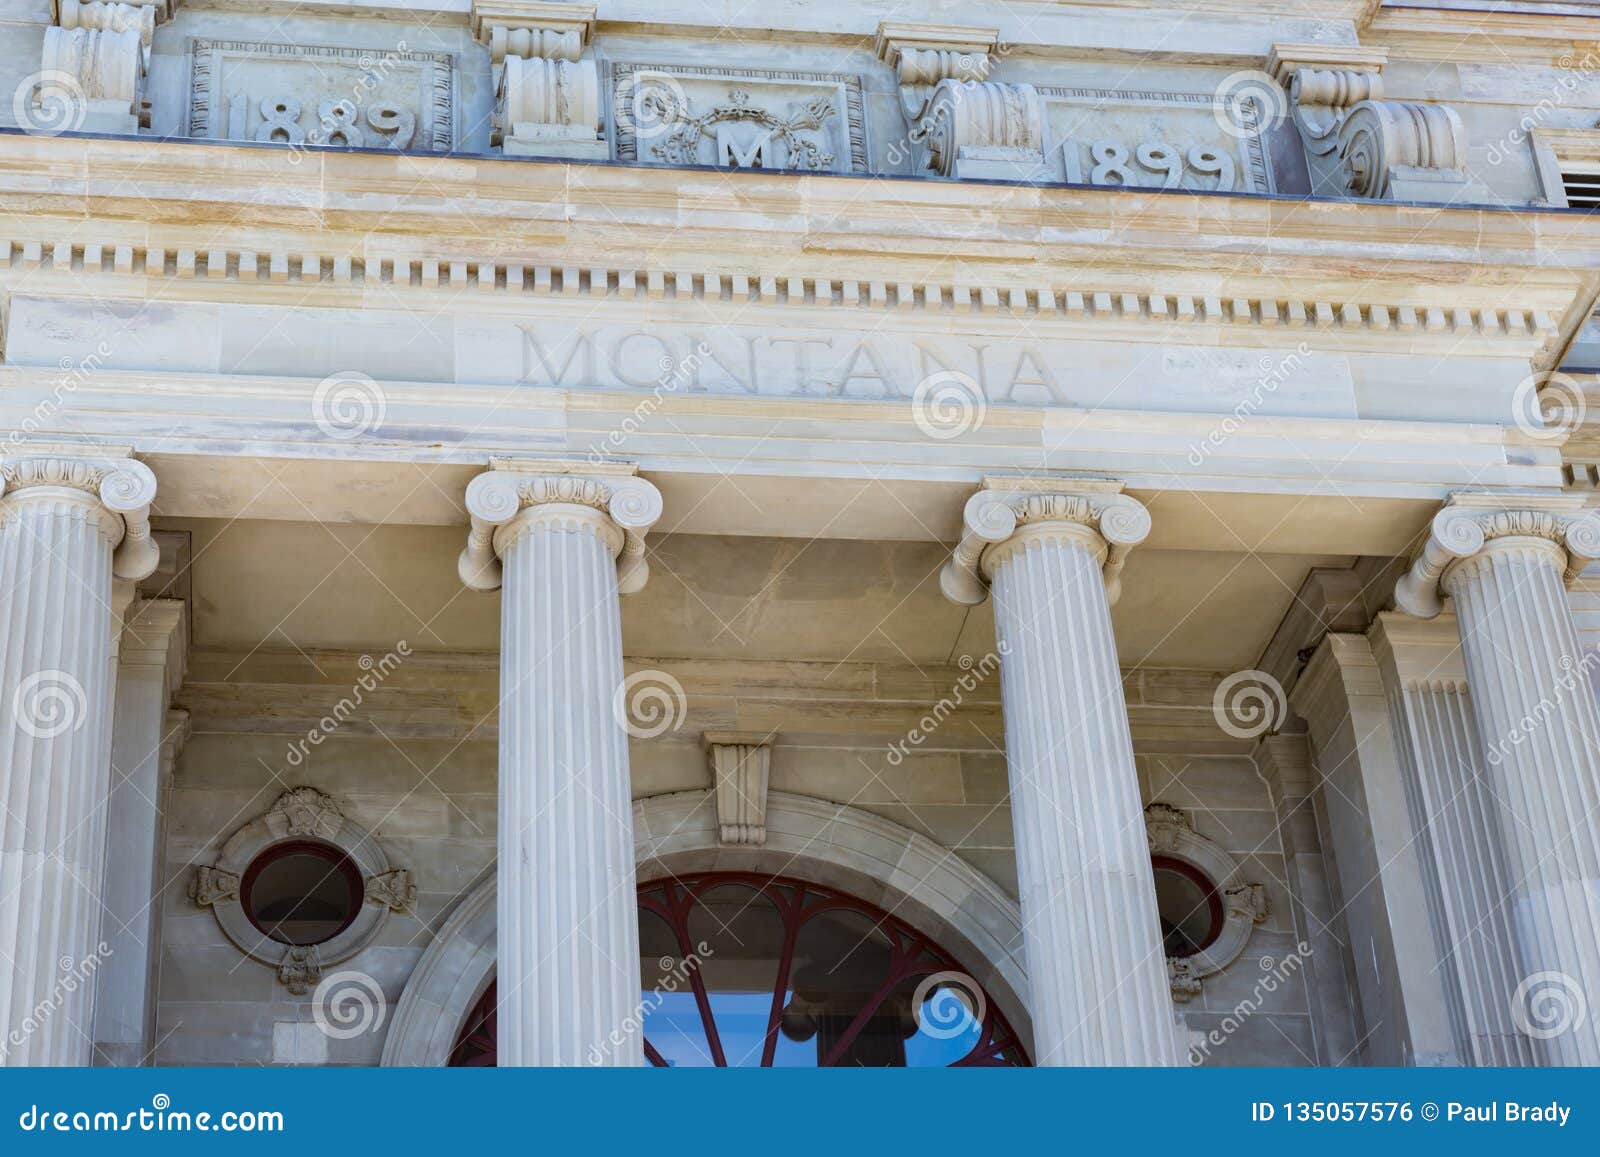 montana state capital building